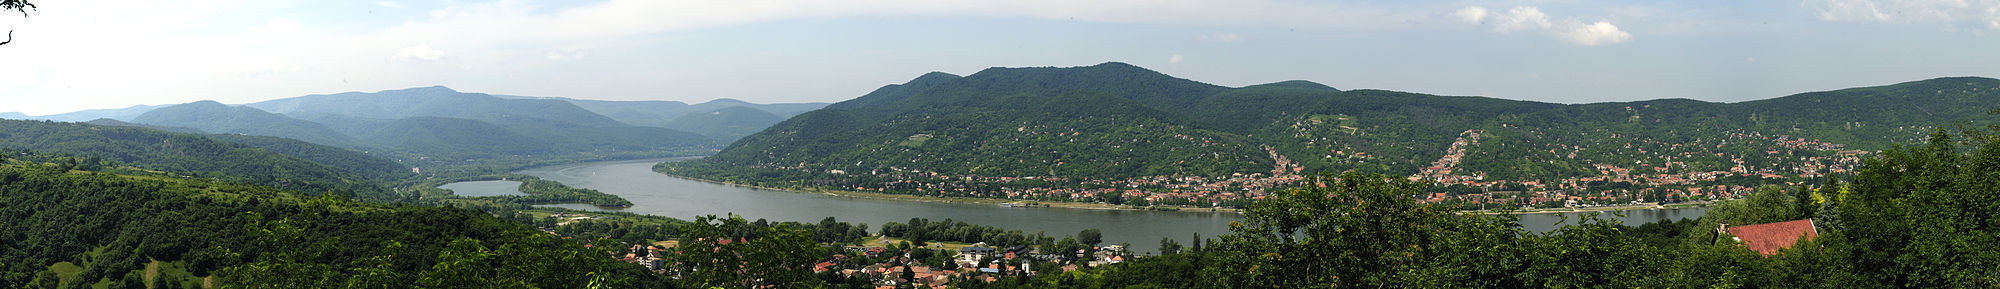 Donauknie bei Visegrád